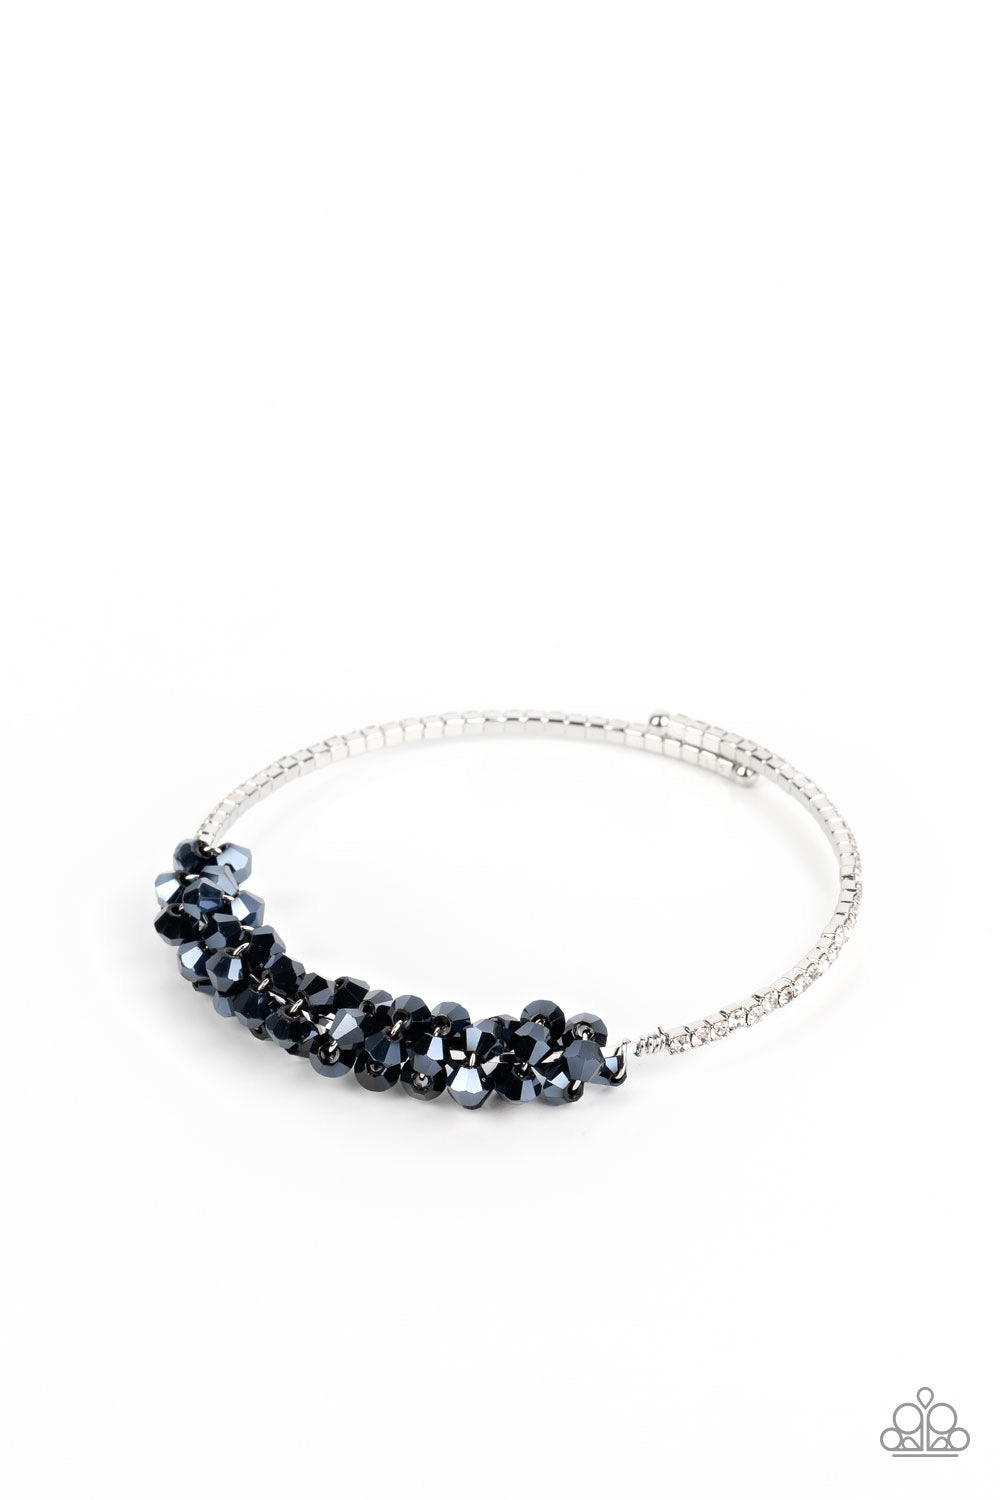 Paparazzi BAUBLY Personality - Blue Bracelet - Cute Bracelets Paparazzi jewelry images